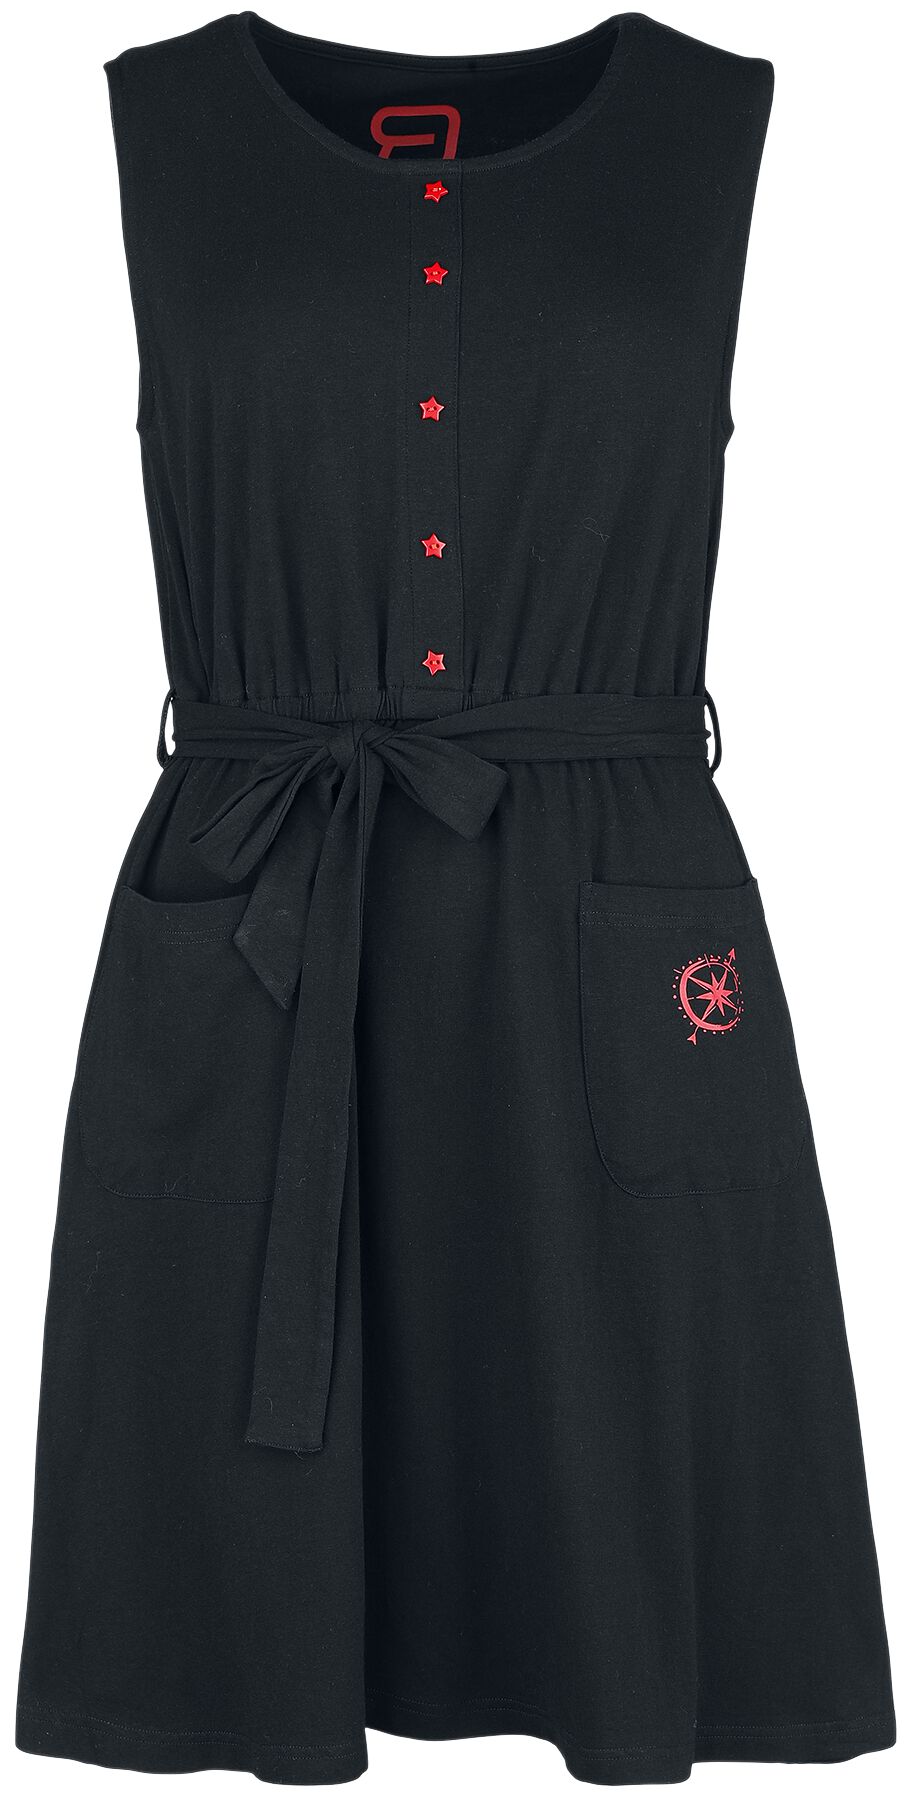 Robe mi-longue de RED by EMP - Kleid mit Kompass Rose und Sternen - S à XL - pour Femme - noir